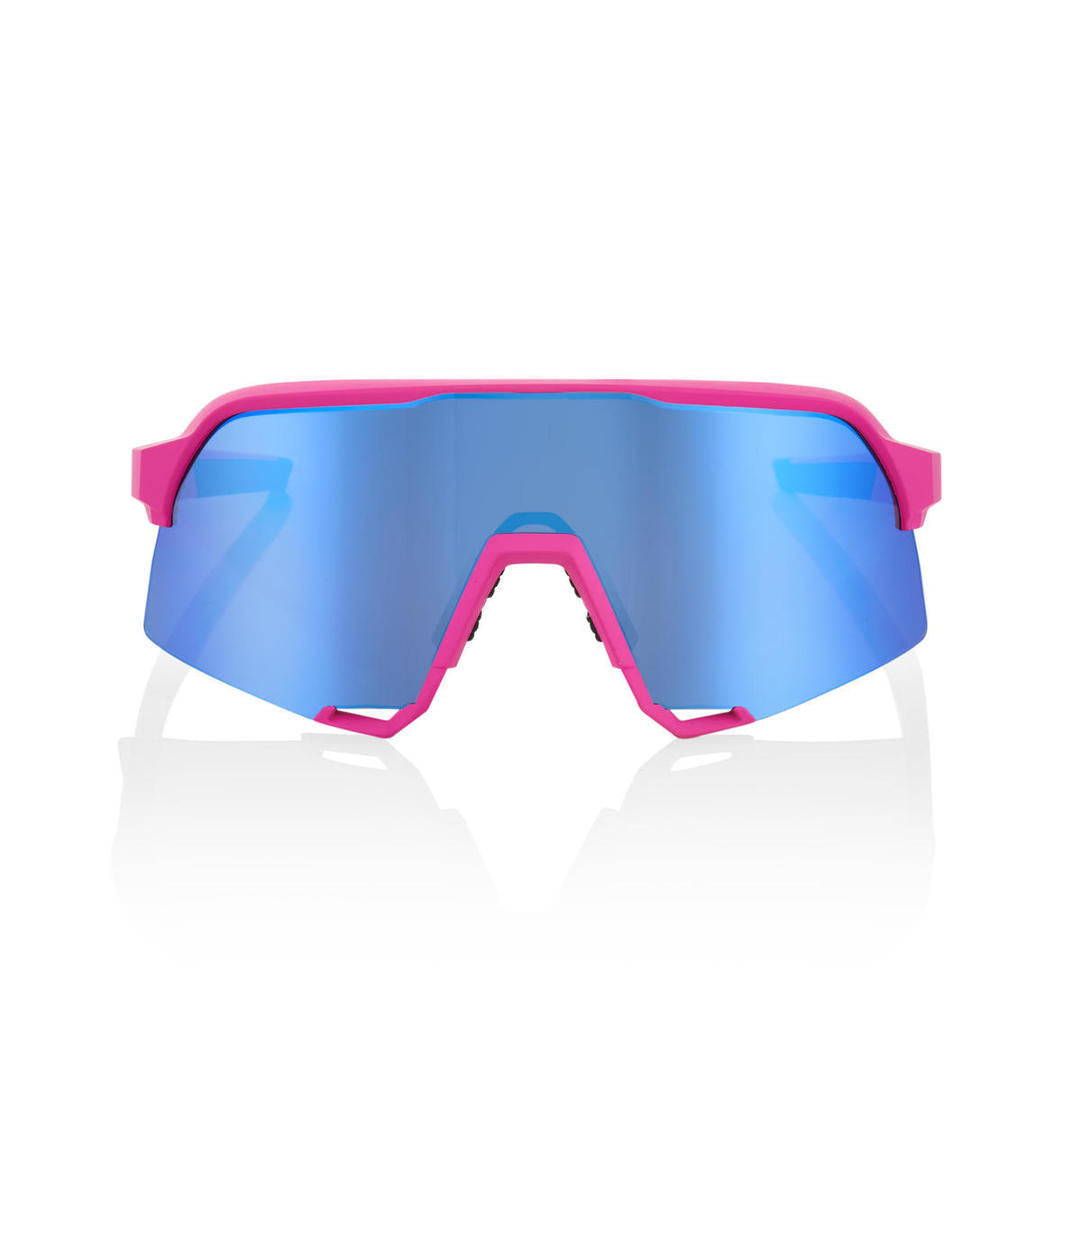 RIDE 100% Ulleres de sol S3 - Pink Hiper Blue Multilayer Mirror Lens